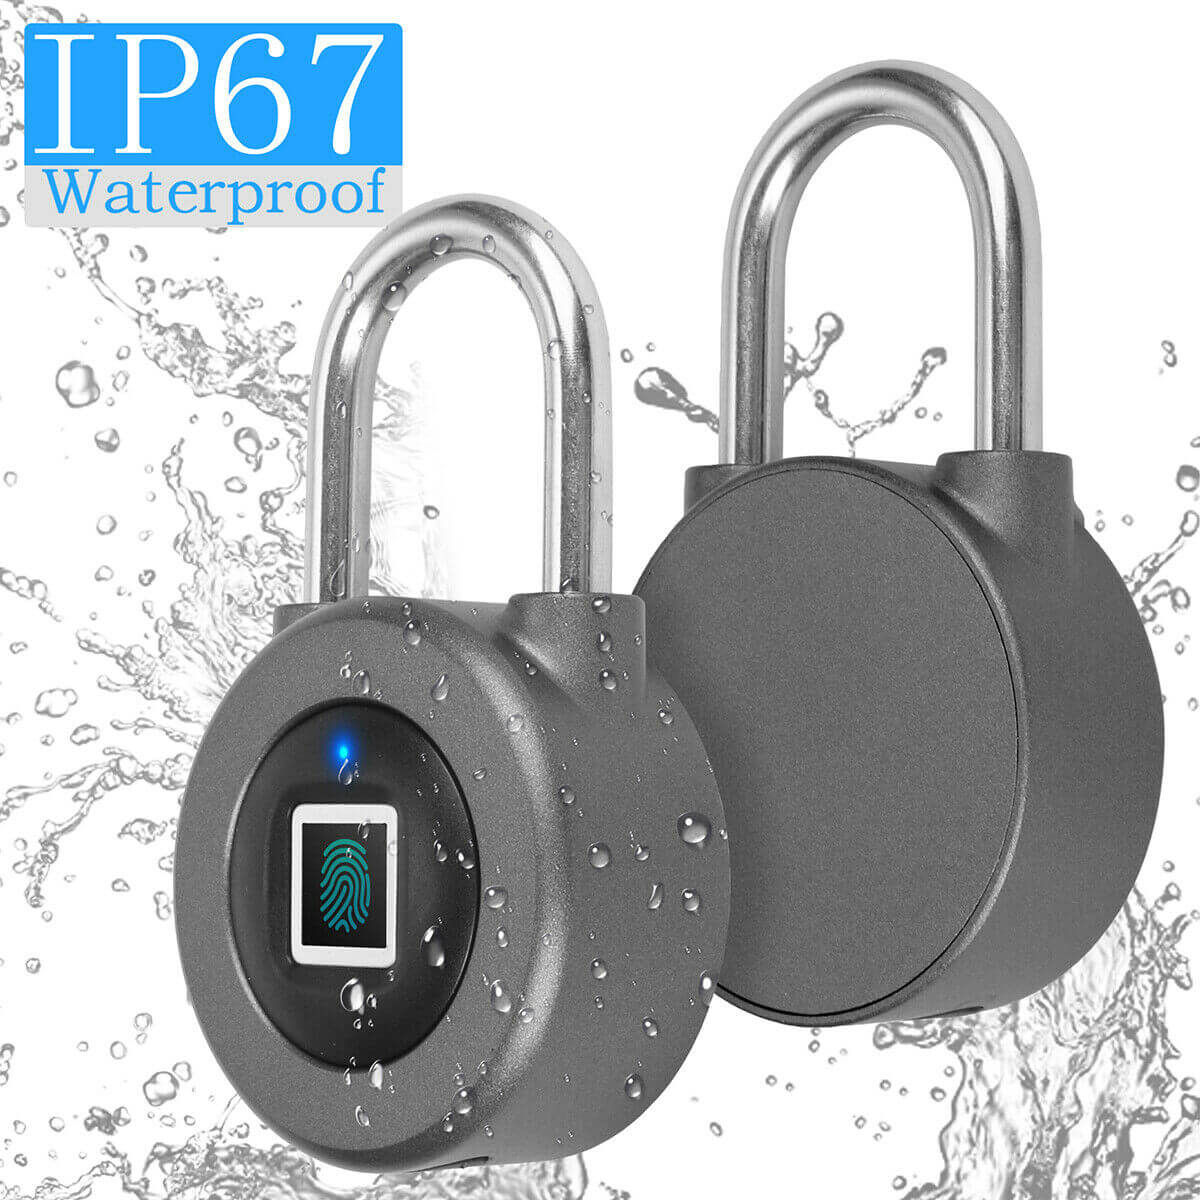 Waterproof Bluetooth Fingerprint Padlock - LINWEY - Best Waterproof Bluetooth Fingerprint Padlock